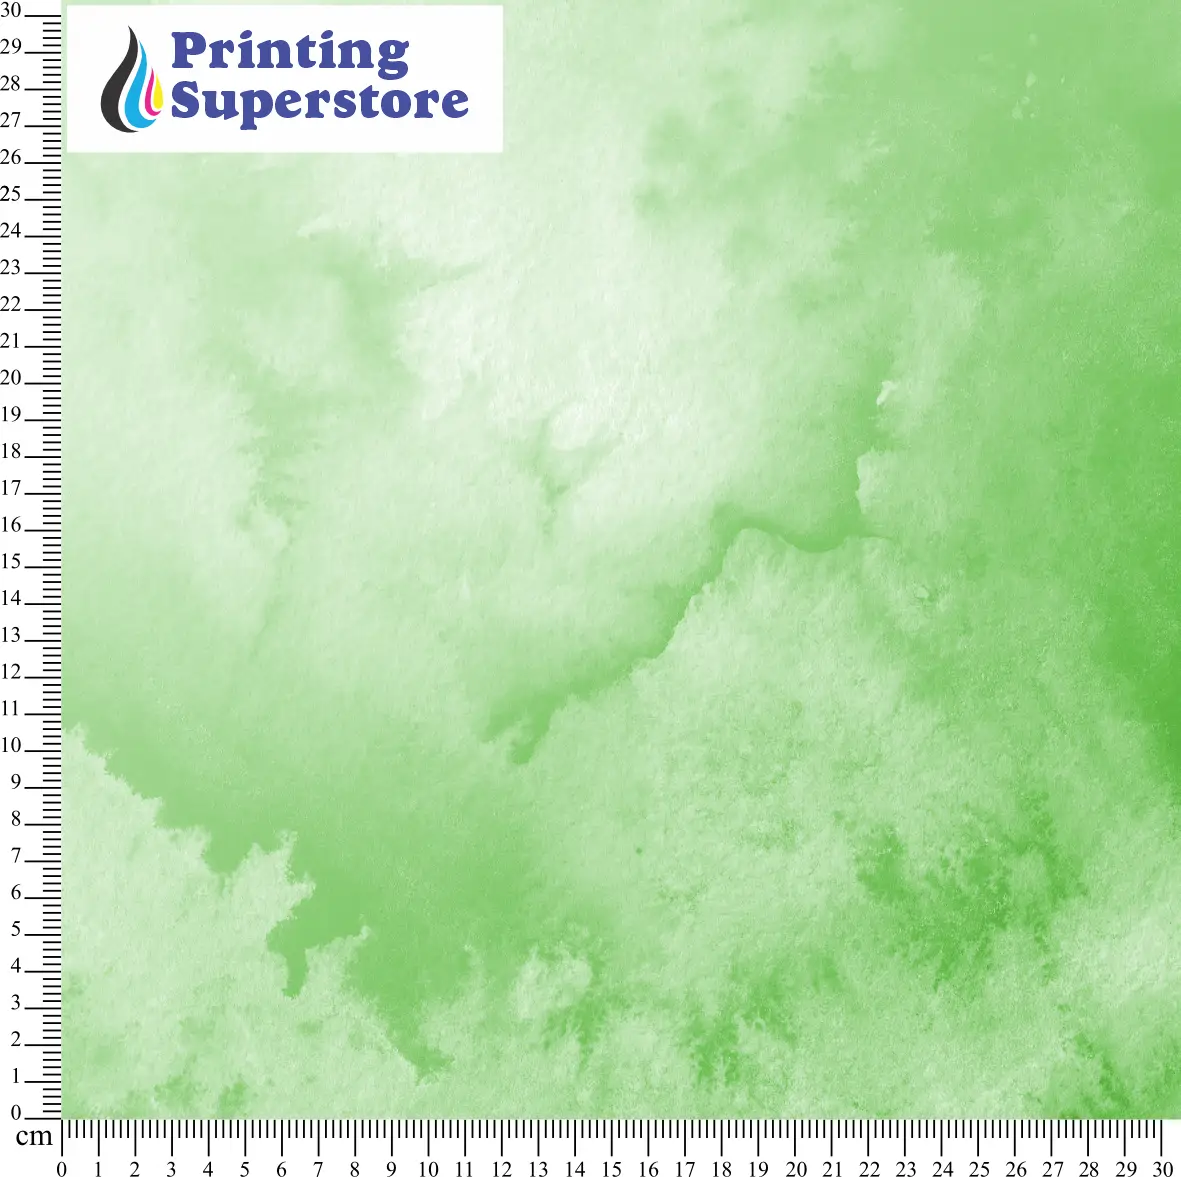 Green Watercolour theme pattern printed on Self Adhesive Vinyl (SAV), Heat Transfer Vinyl (HTV) and Cardstock.